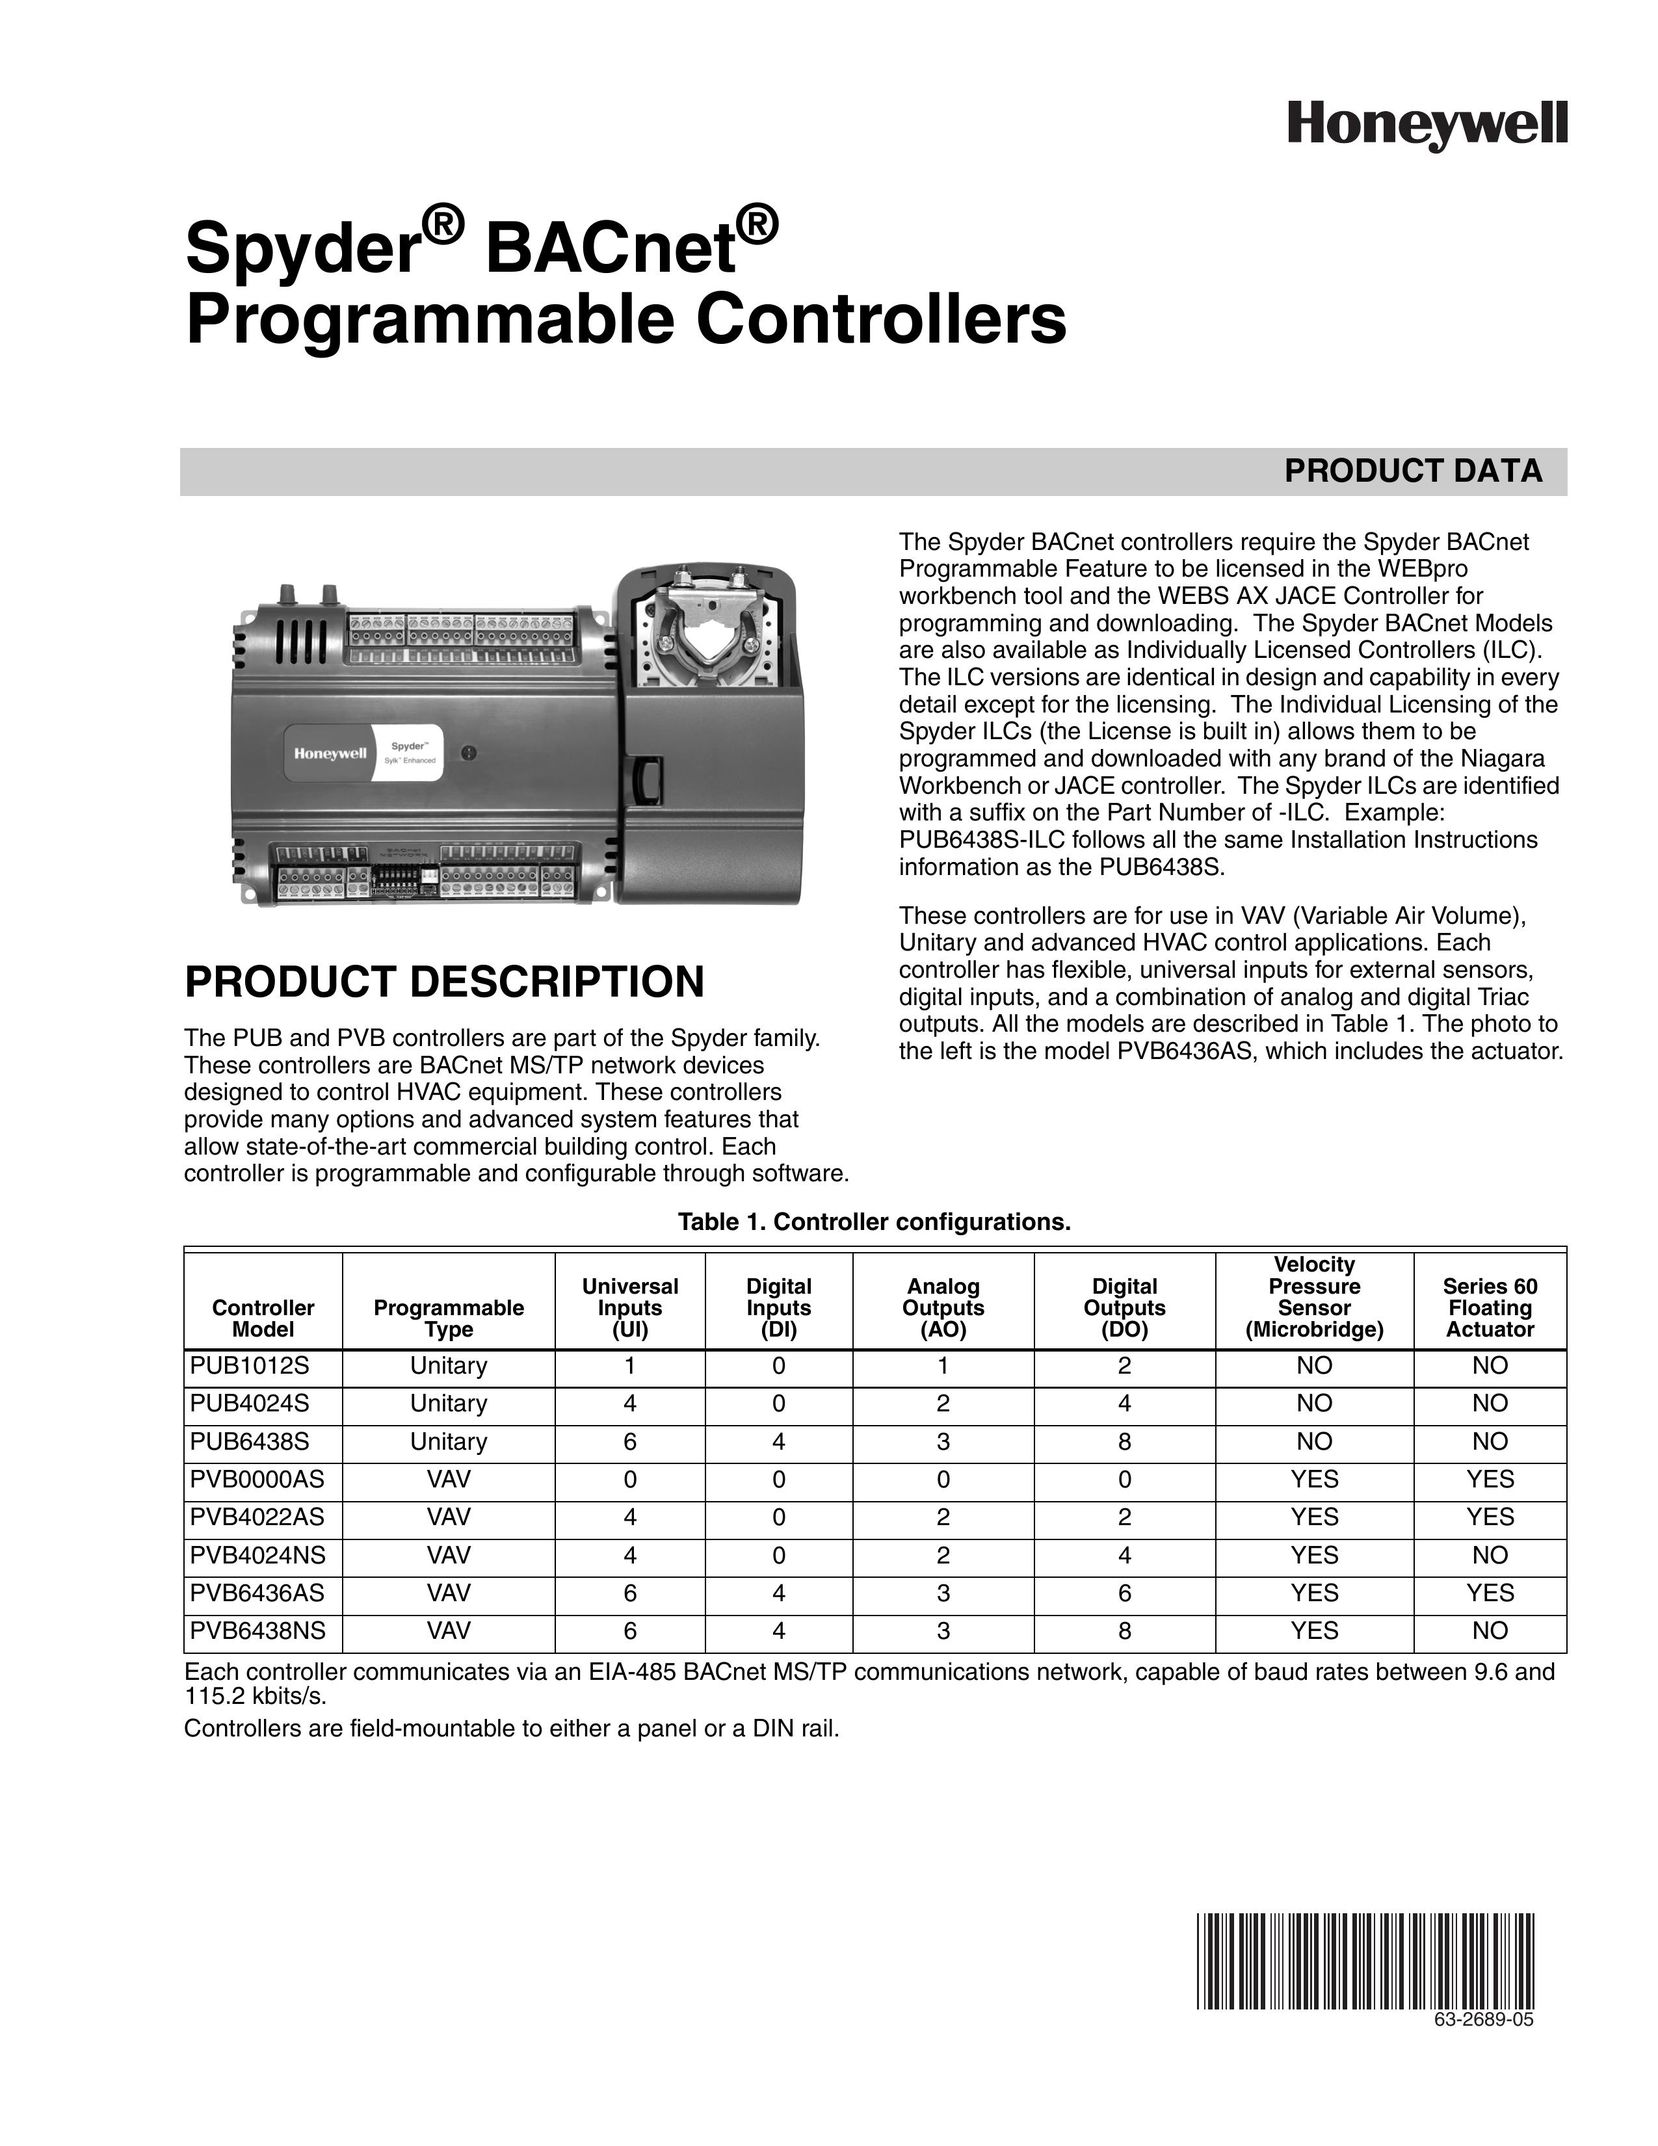 Honeywell PVB6438NS Universal Remote User Manual